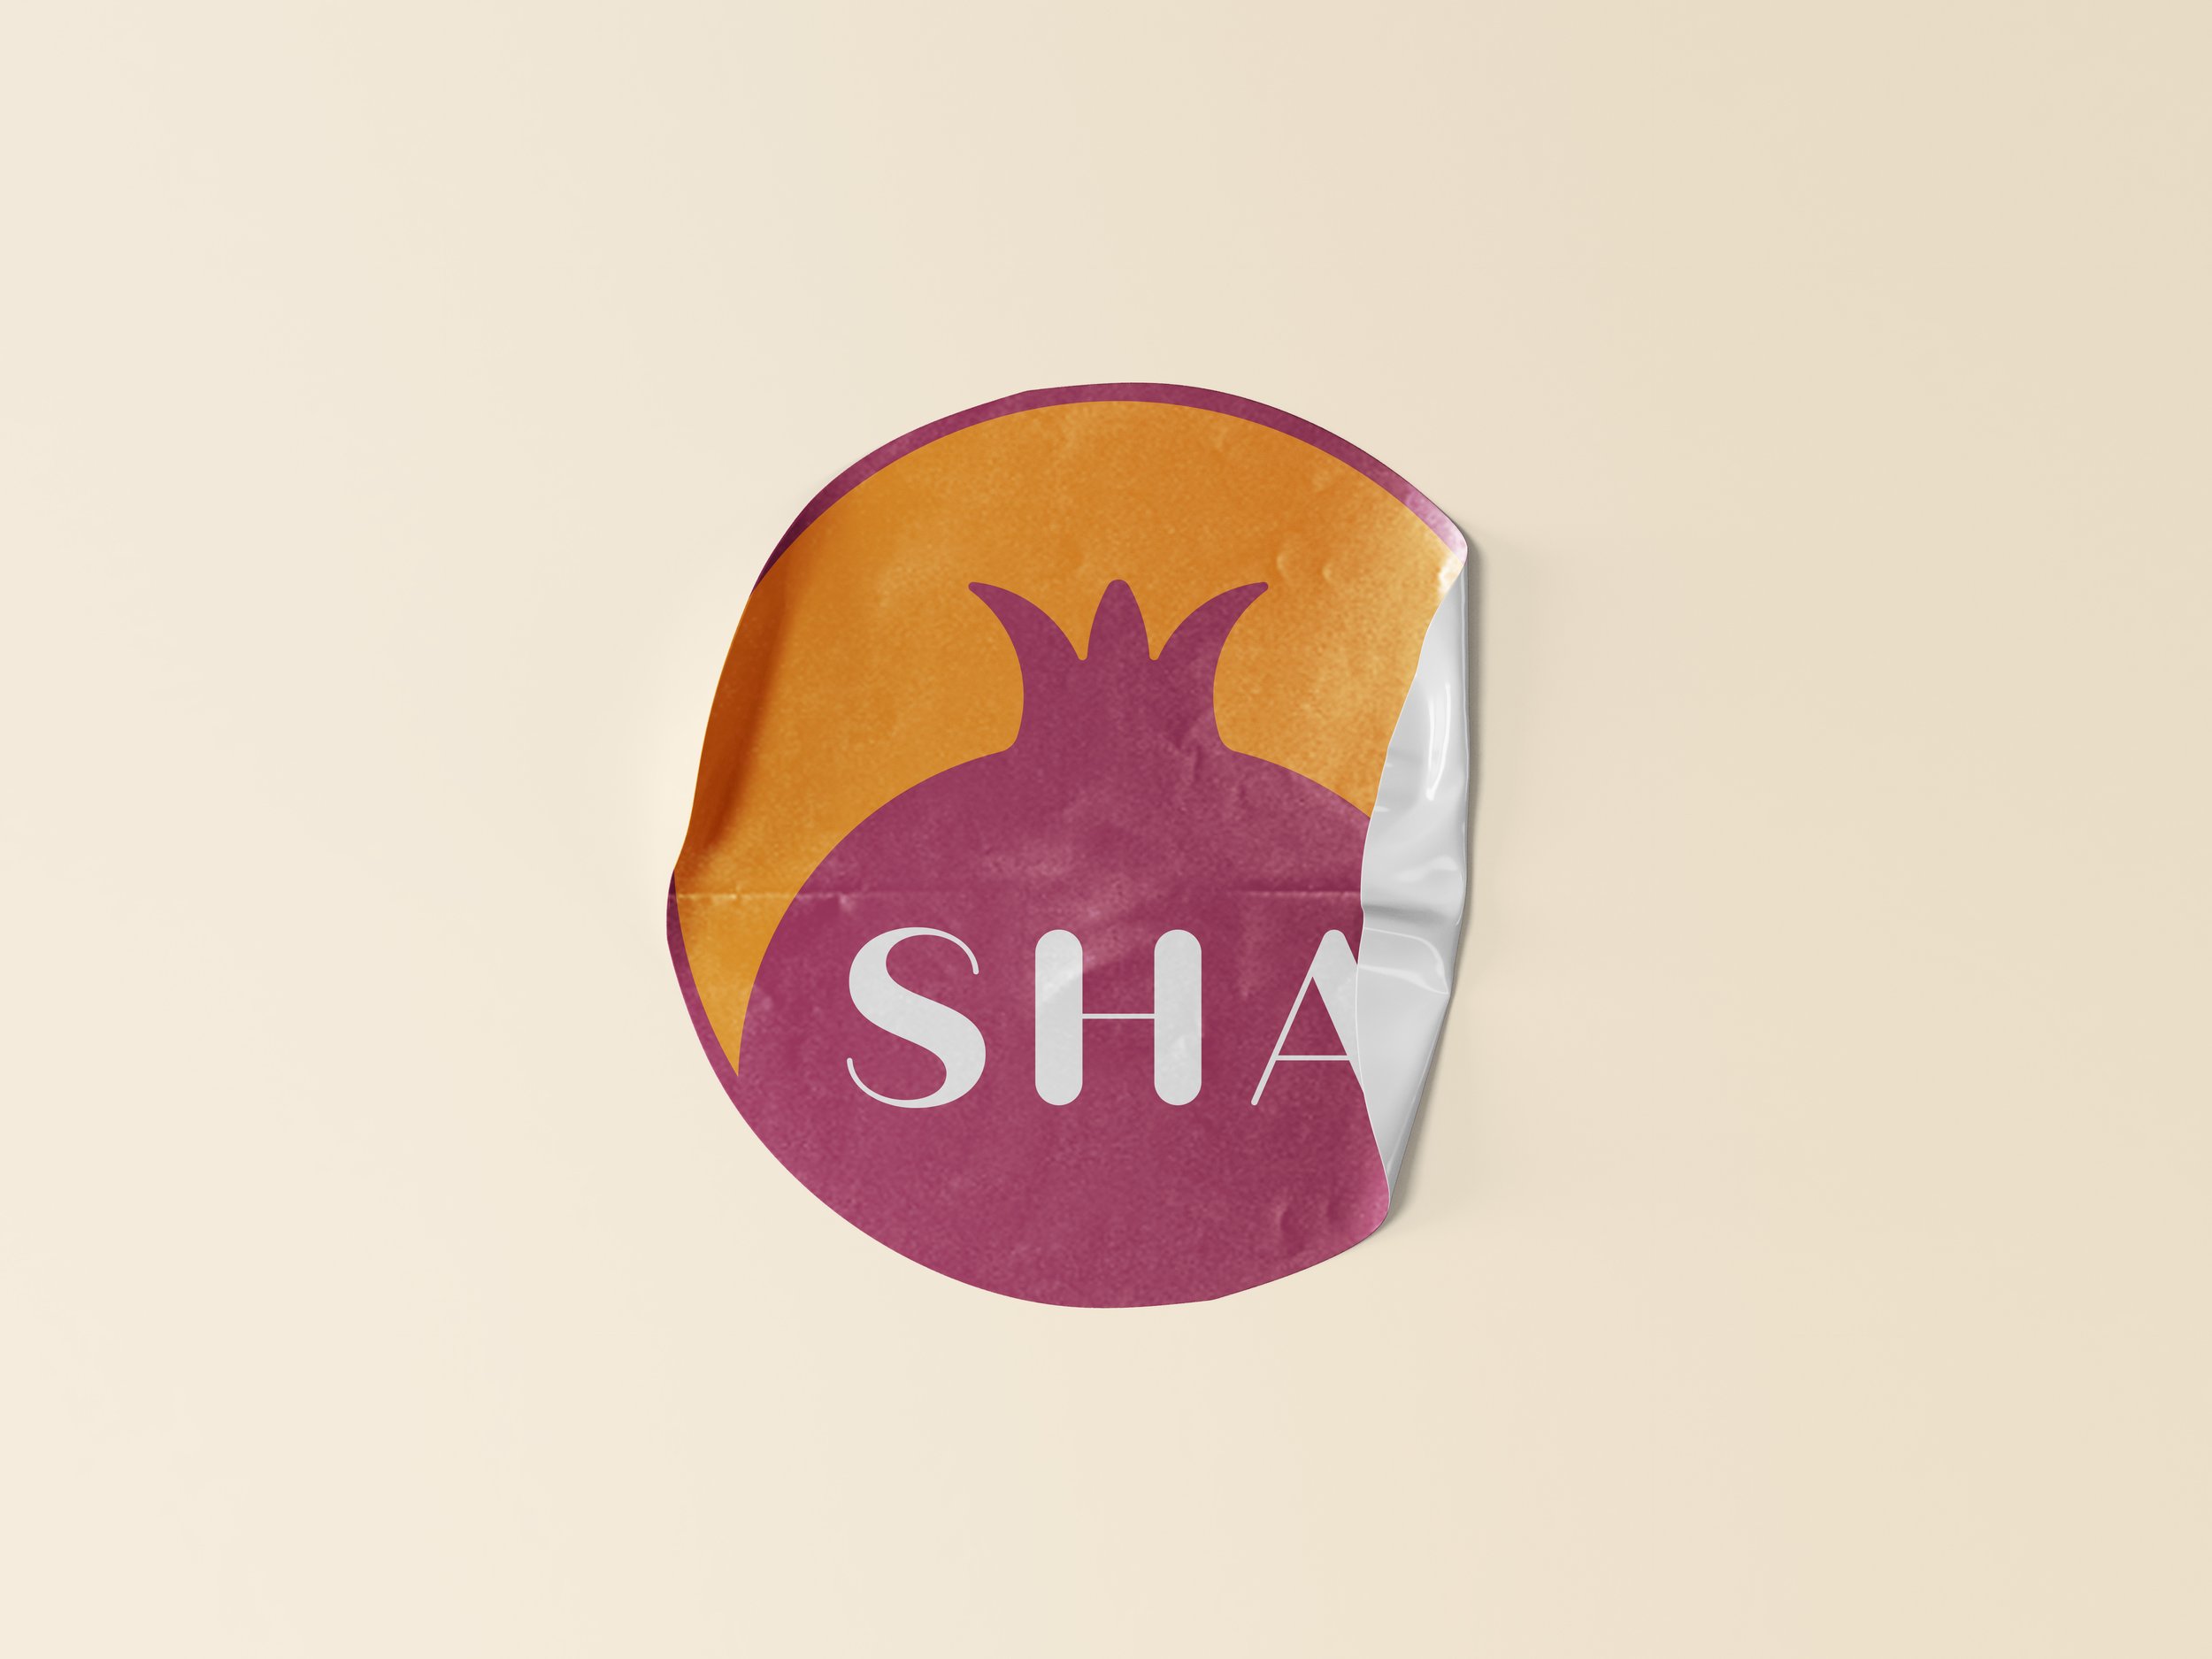 Sha_sticker_mockup.jpg